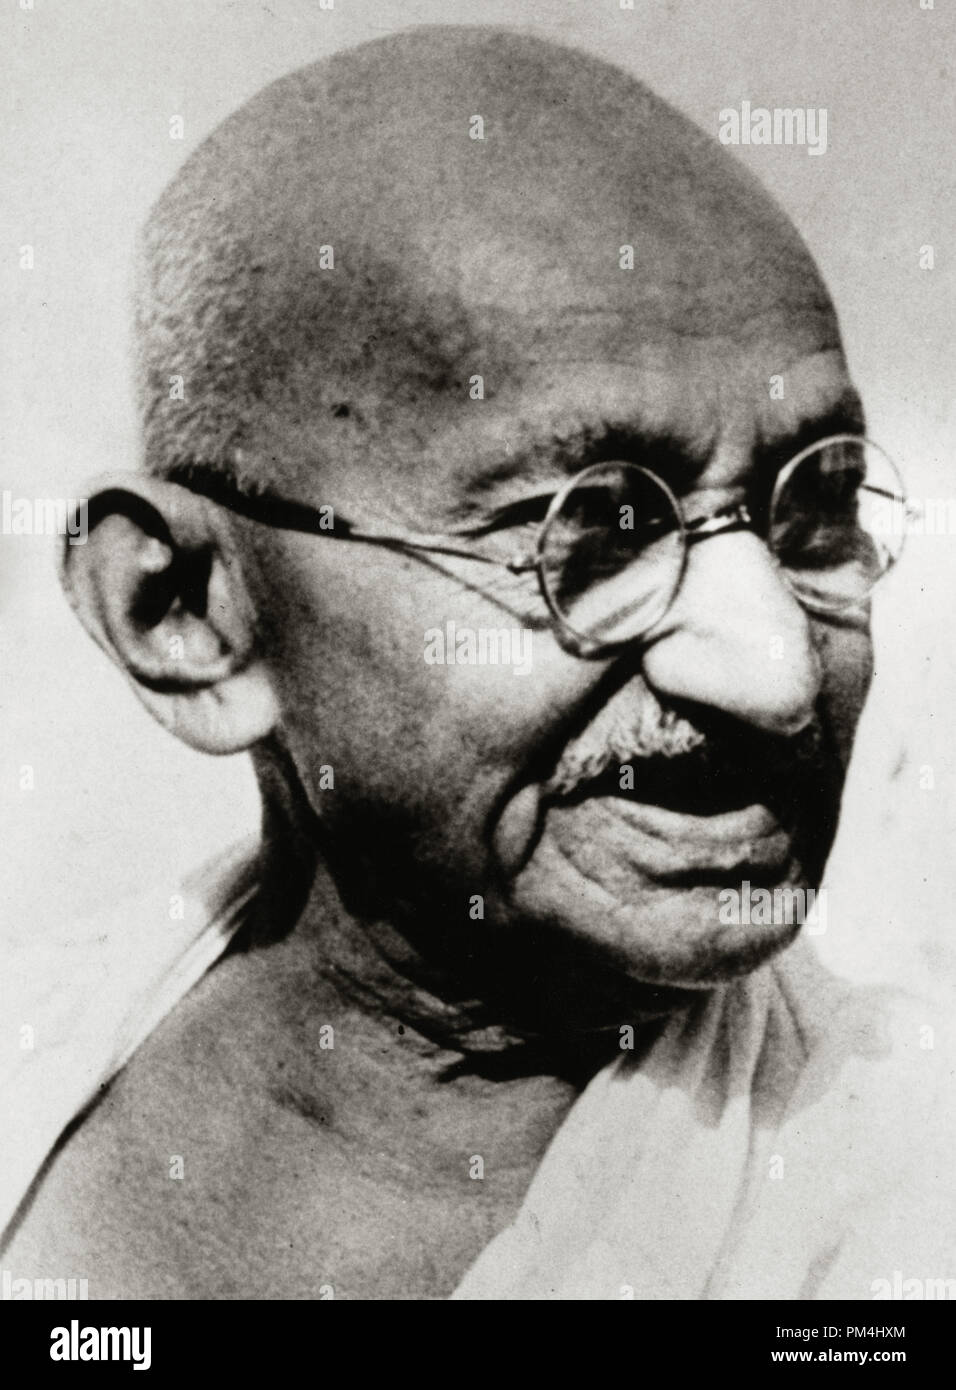 Mahatma Gandhi (Mohandas Karamchand Gandhi) on his 78th birthday, September 22, 1946  File Reference # 1003 433THA Stock Photo